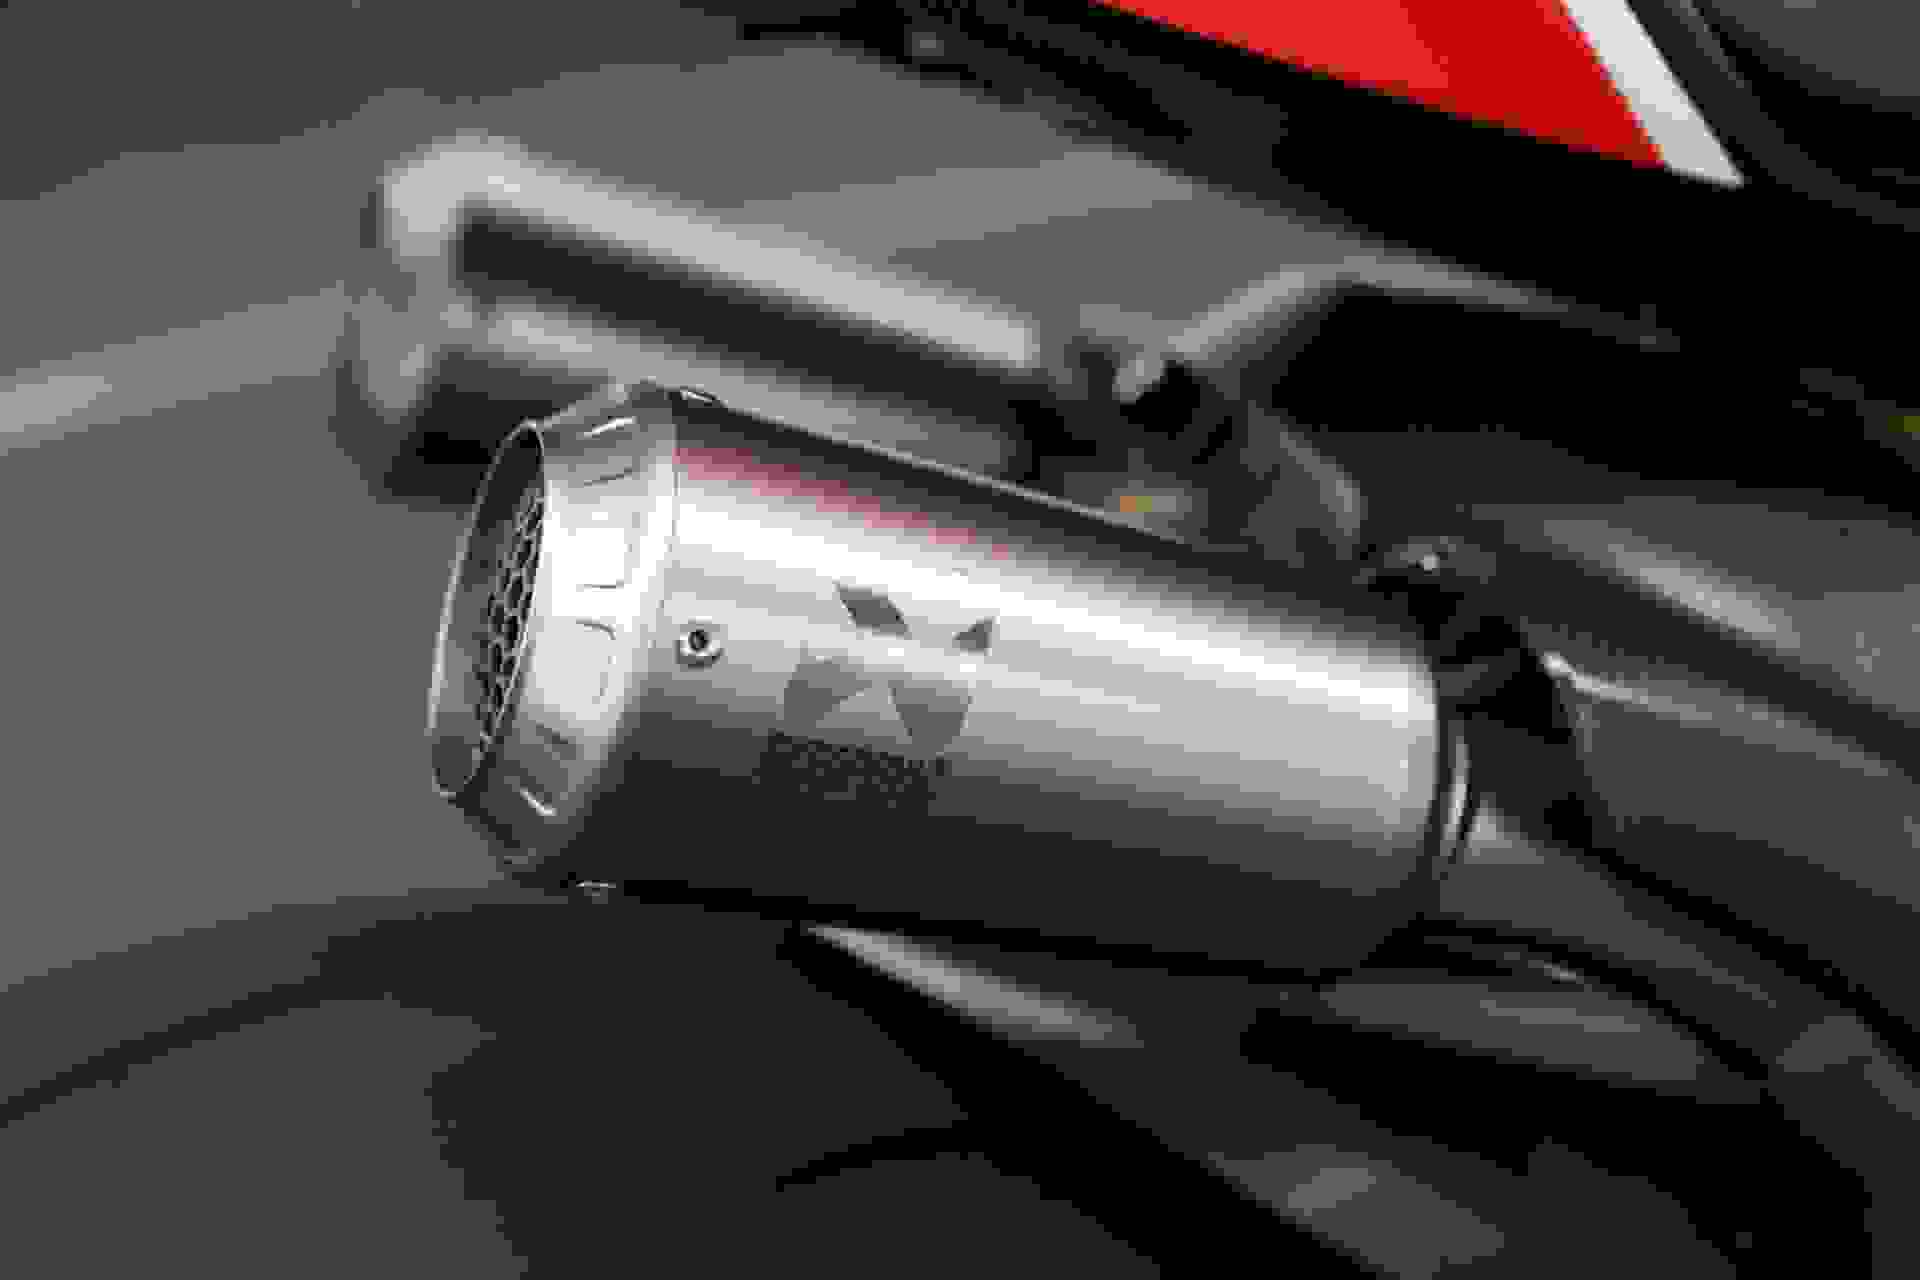 Ducati Superleggera Photo fafa444d-17a1-4491-adc3-32a3d773fede.jpg